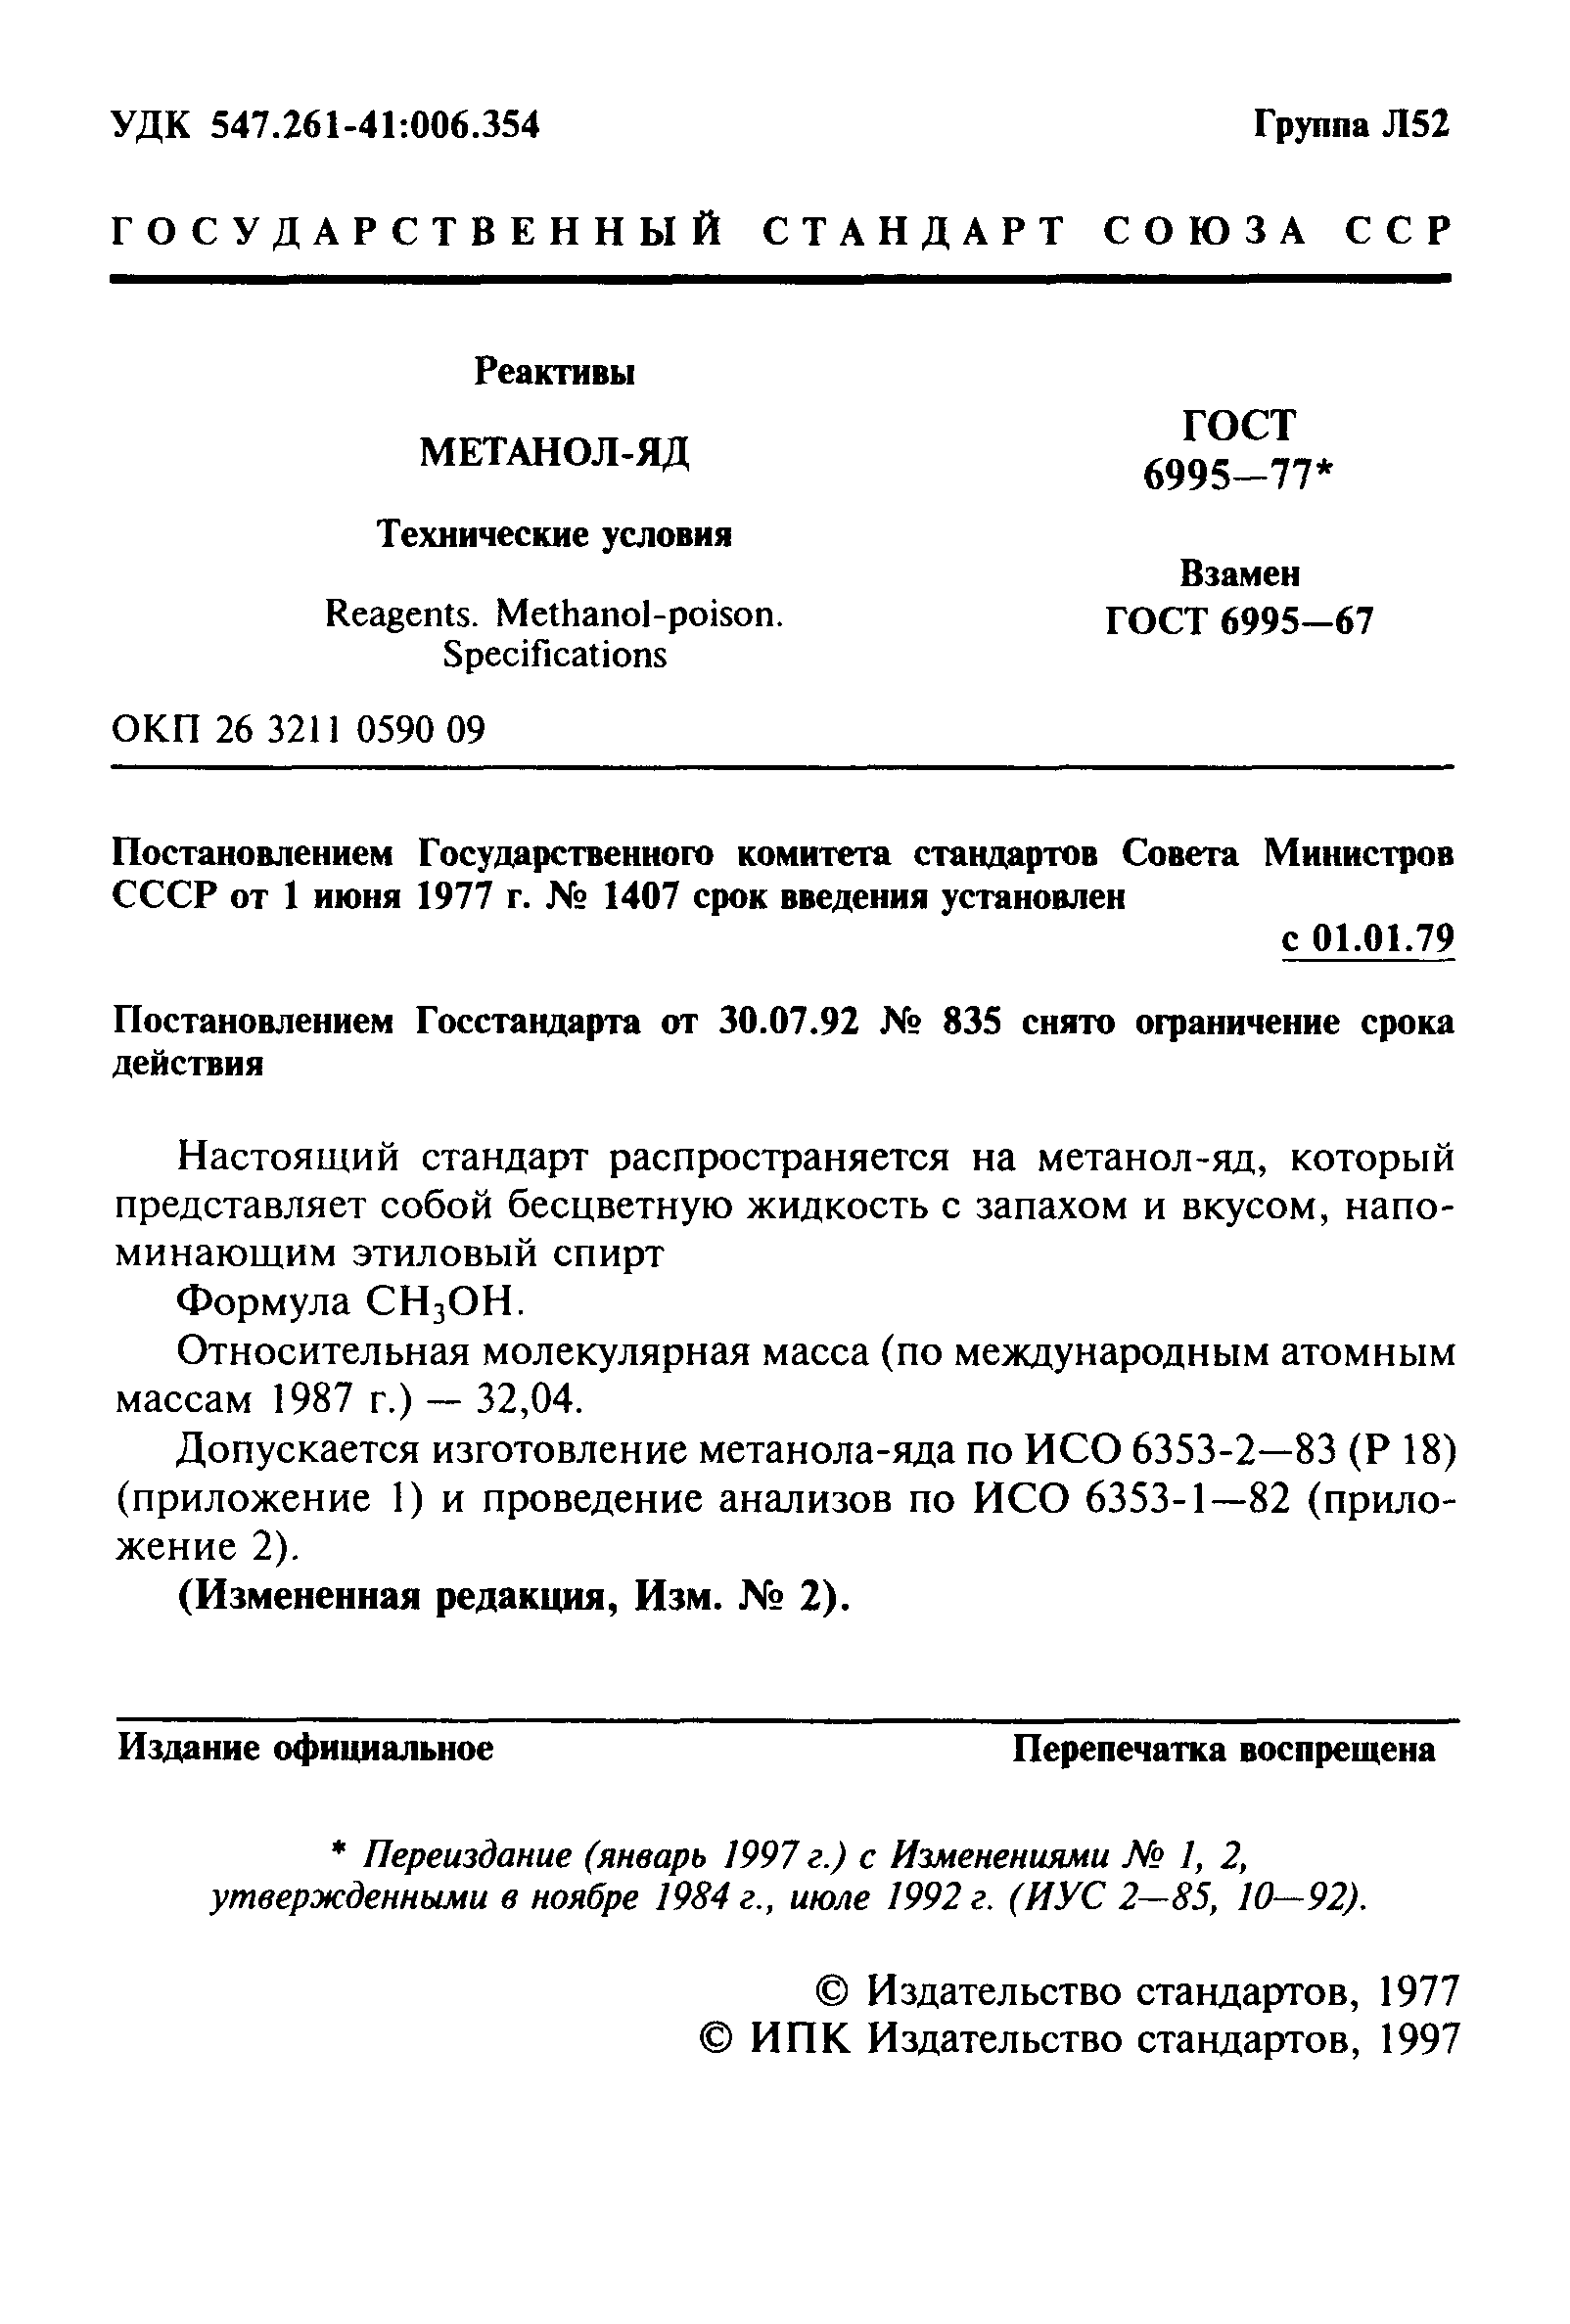 ГОСТ 6995-77